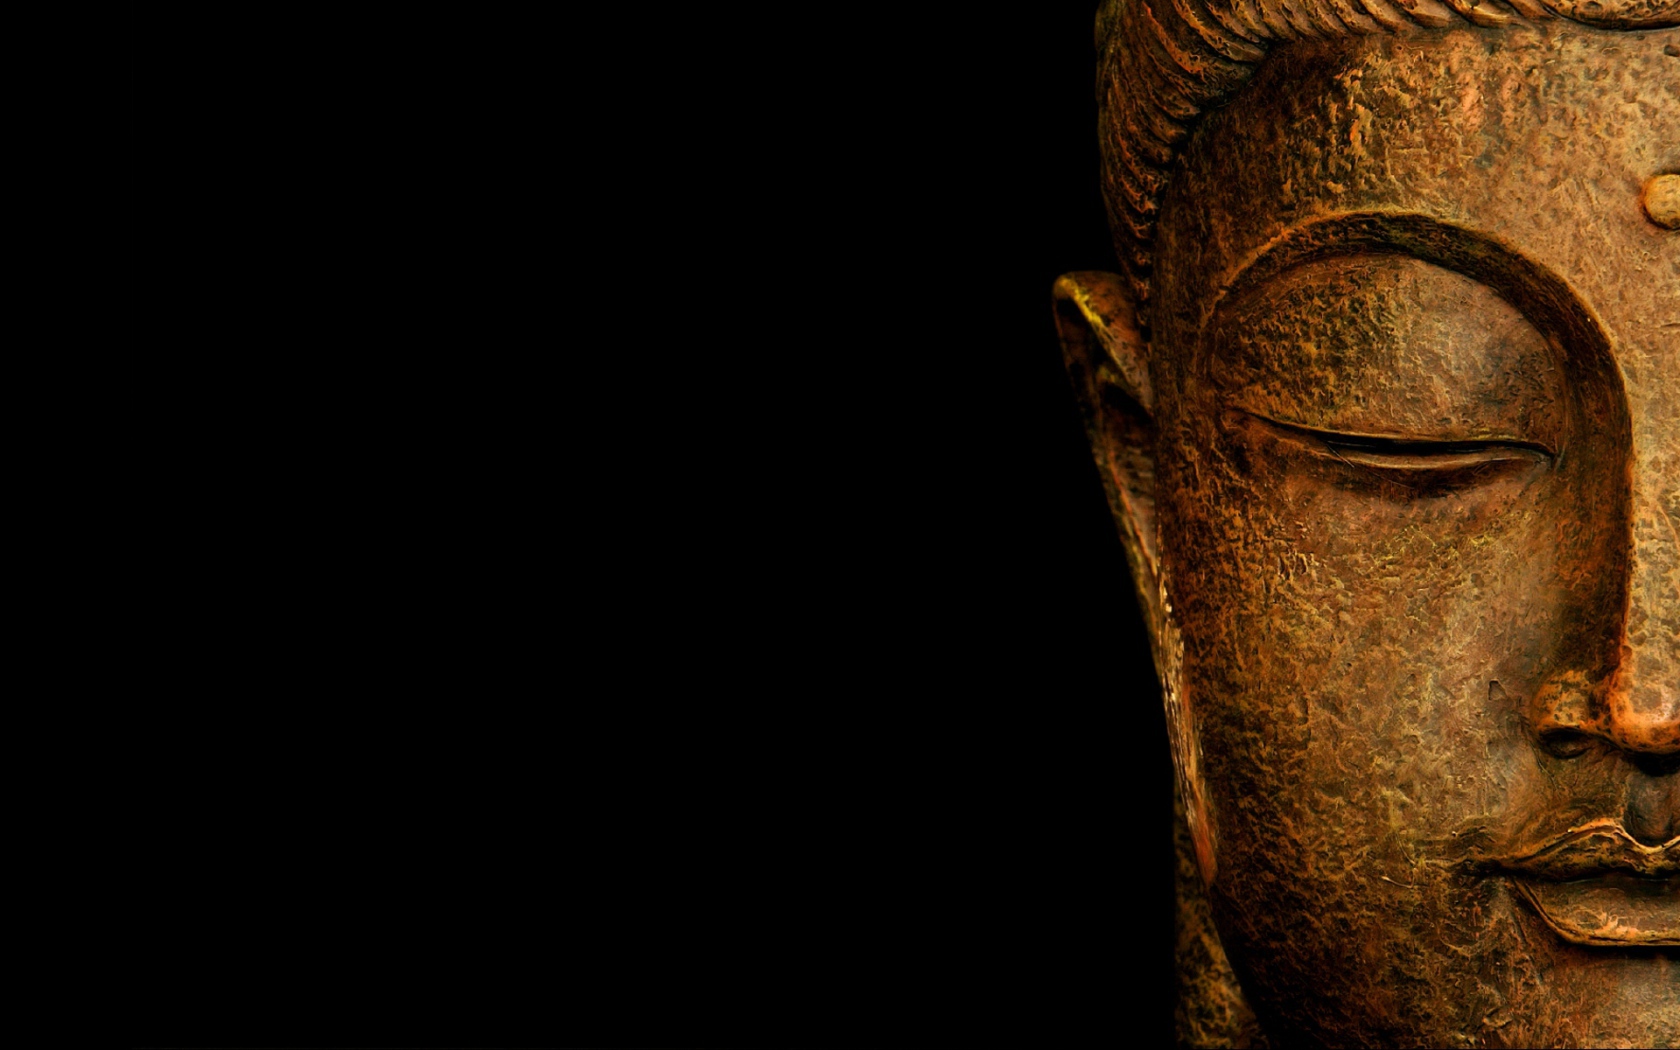 Лицо Будды